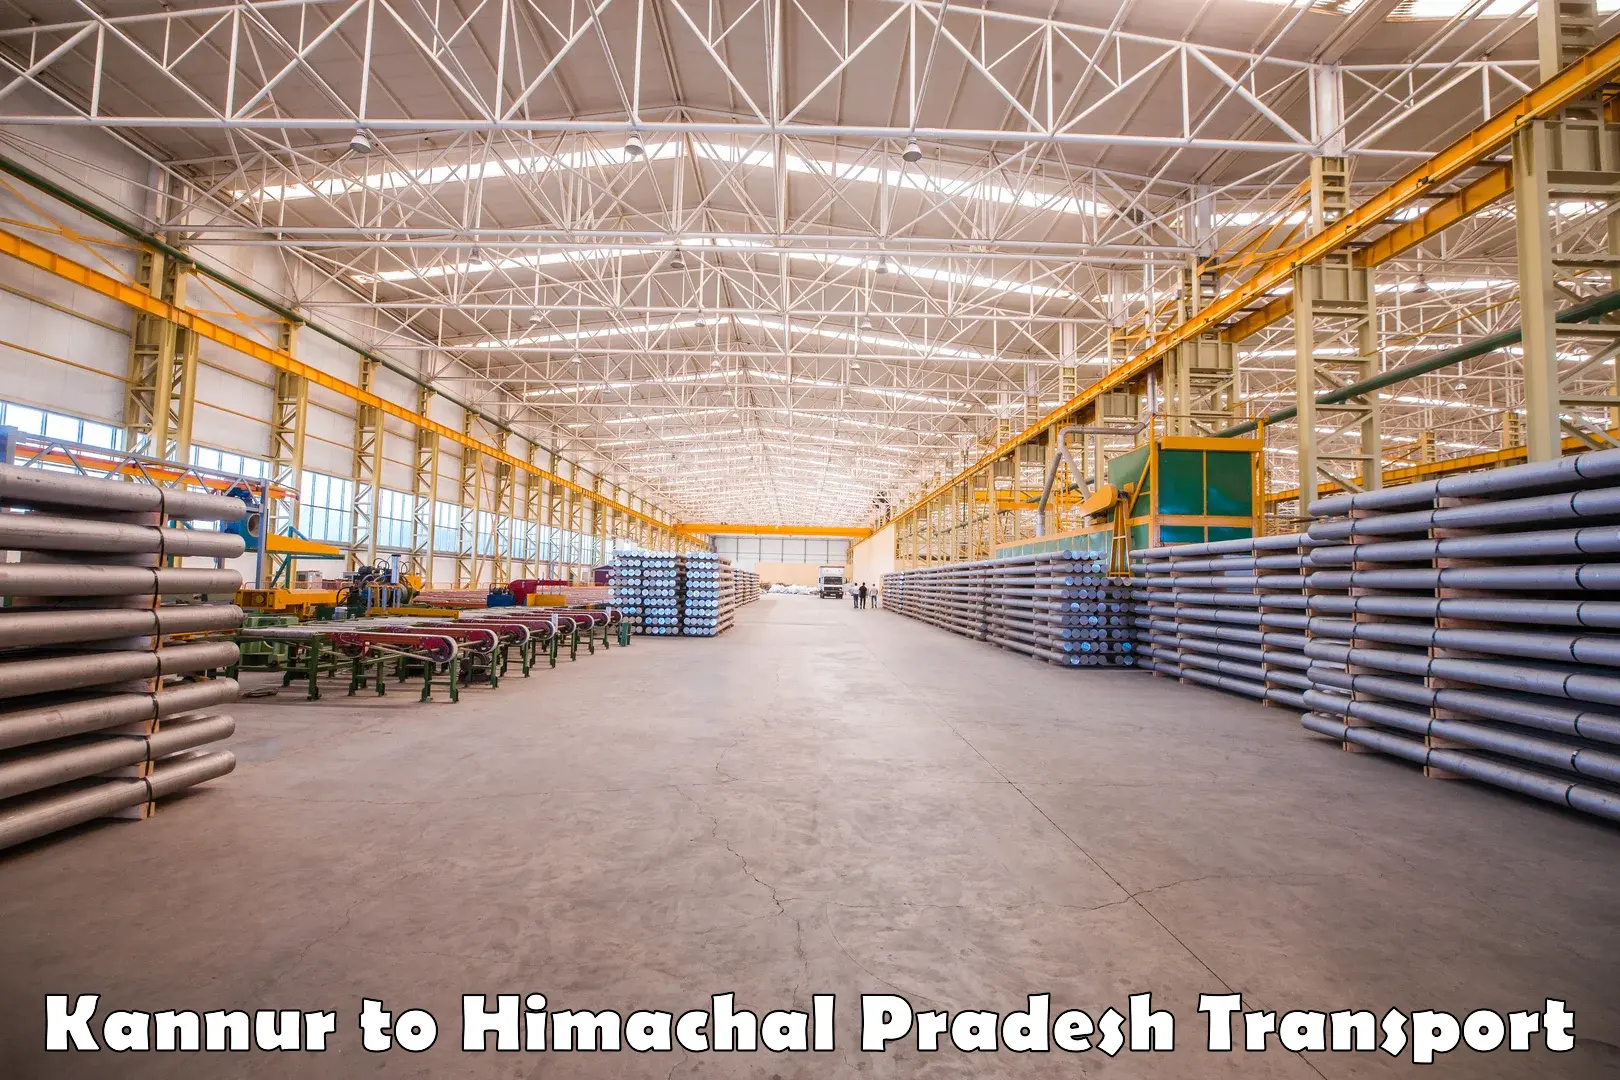 Truck transport companies in India Kannur to Himachal Pradesh